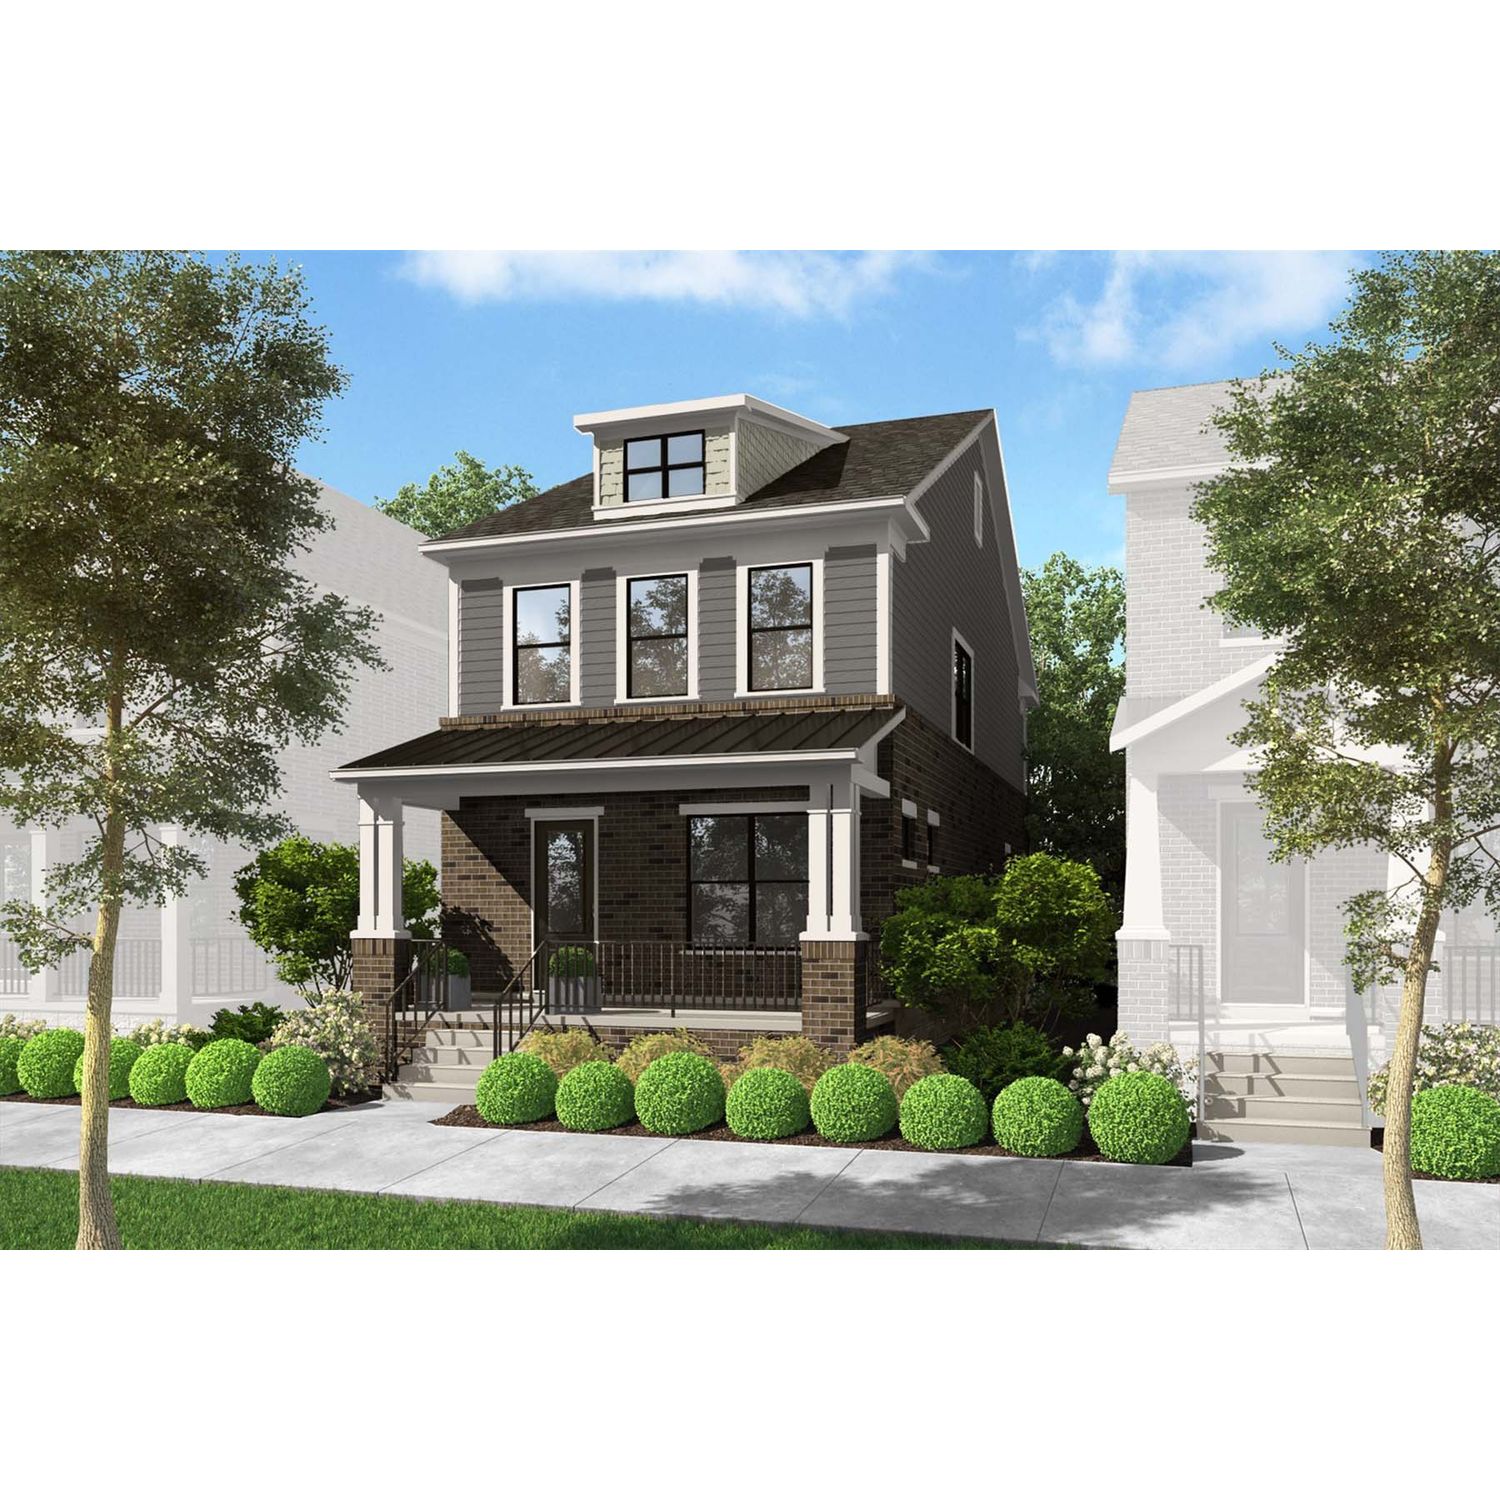 houses for rent columbus ohio 43207